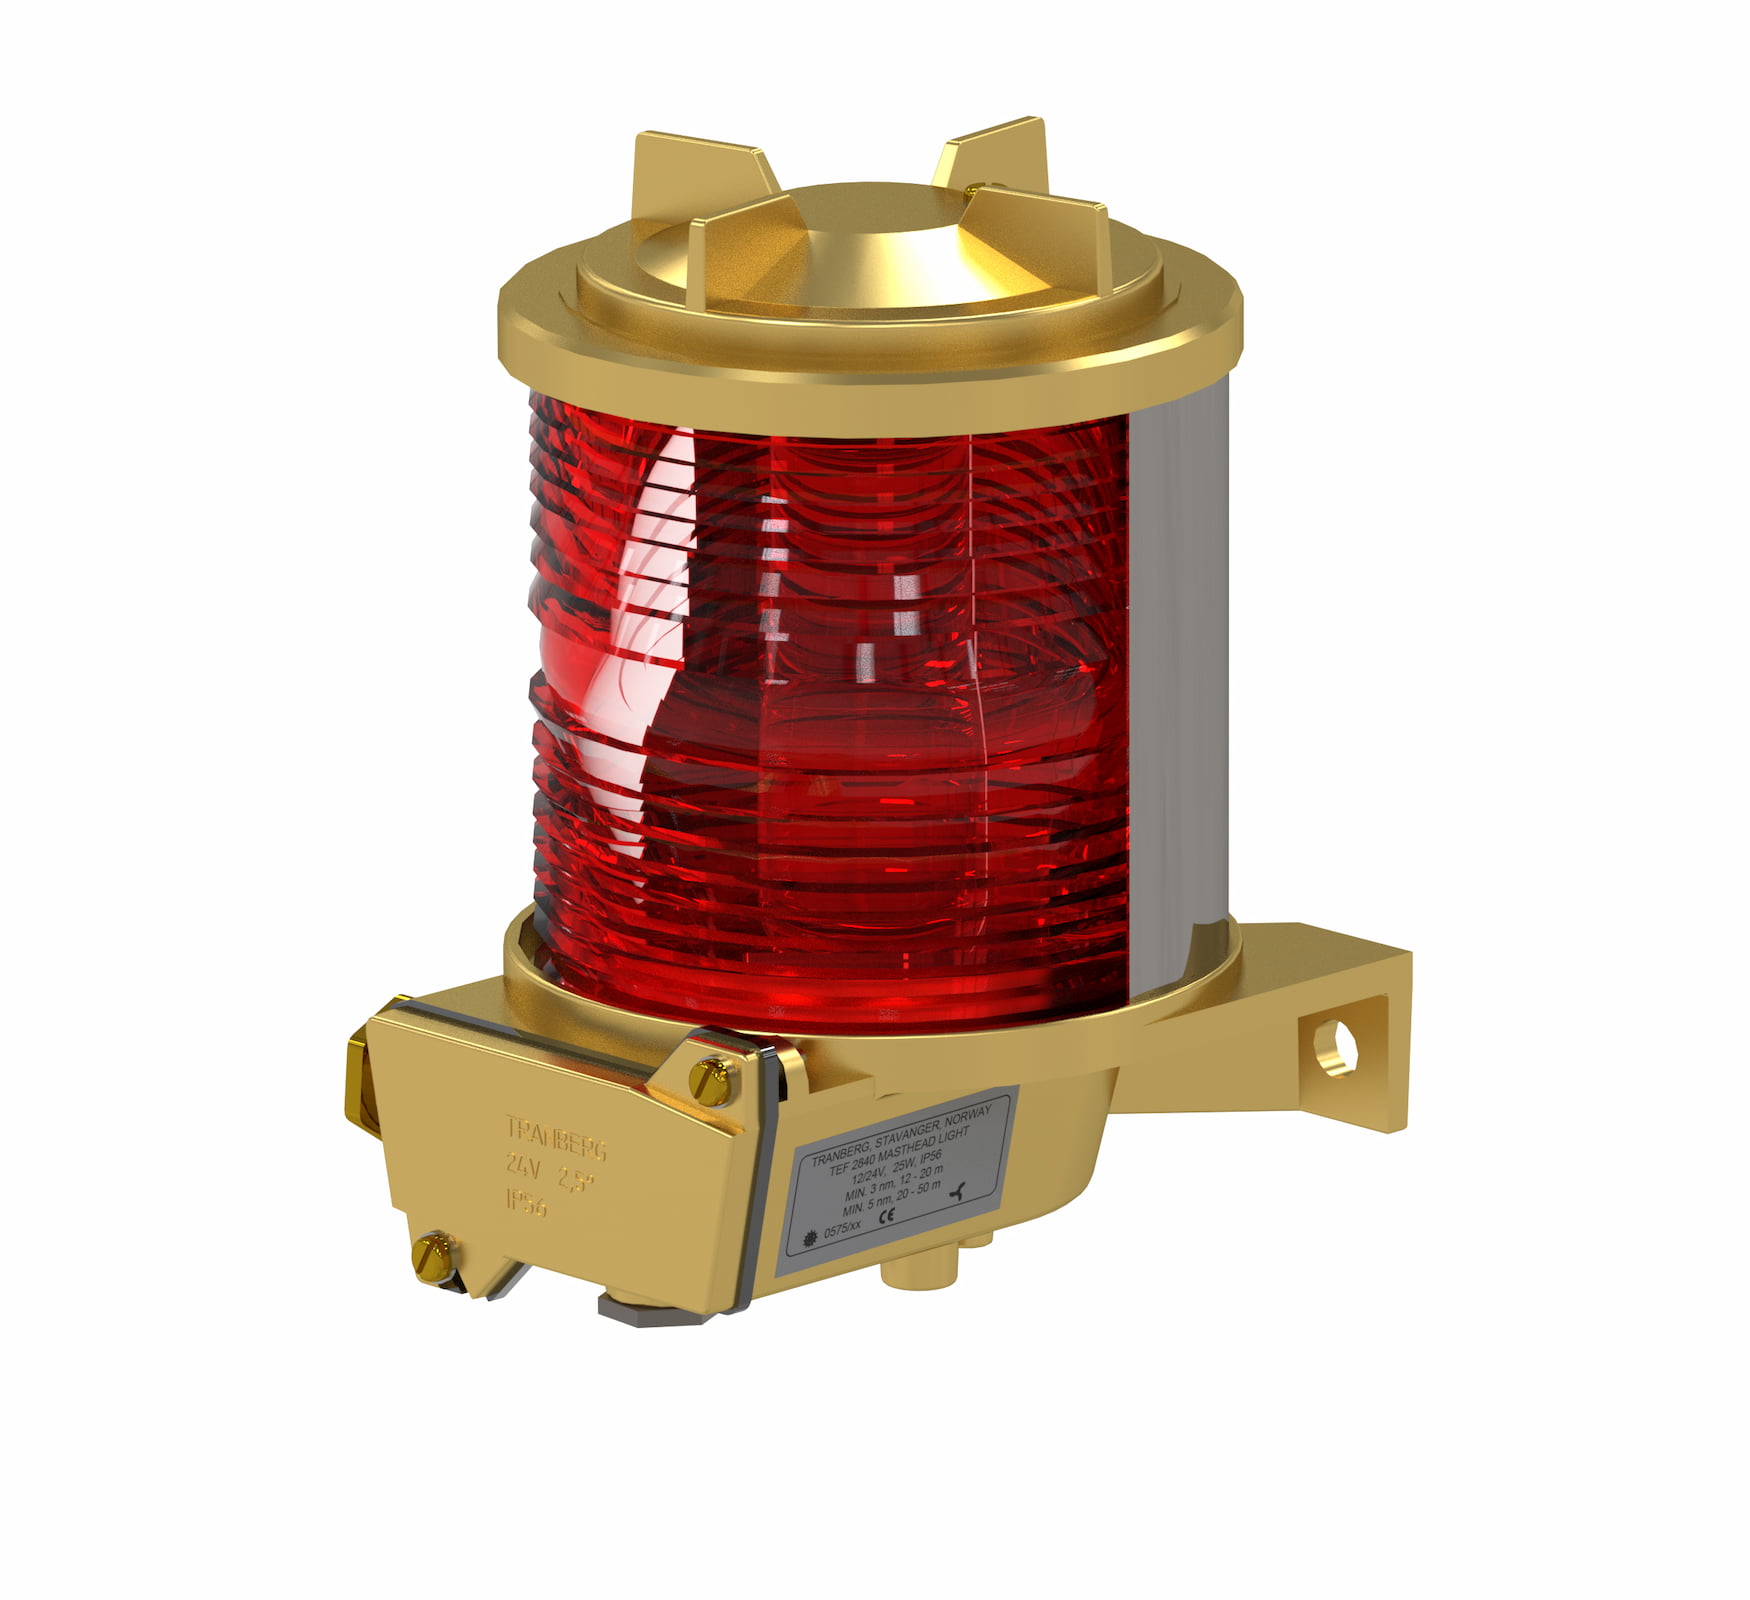 TEF 2870 Navigation light: Port 112,5 deg. Red, P28S, 24V, Brass/Glass